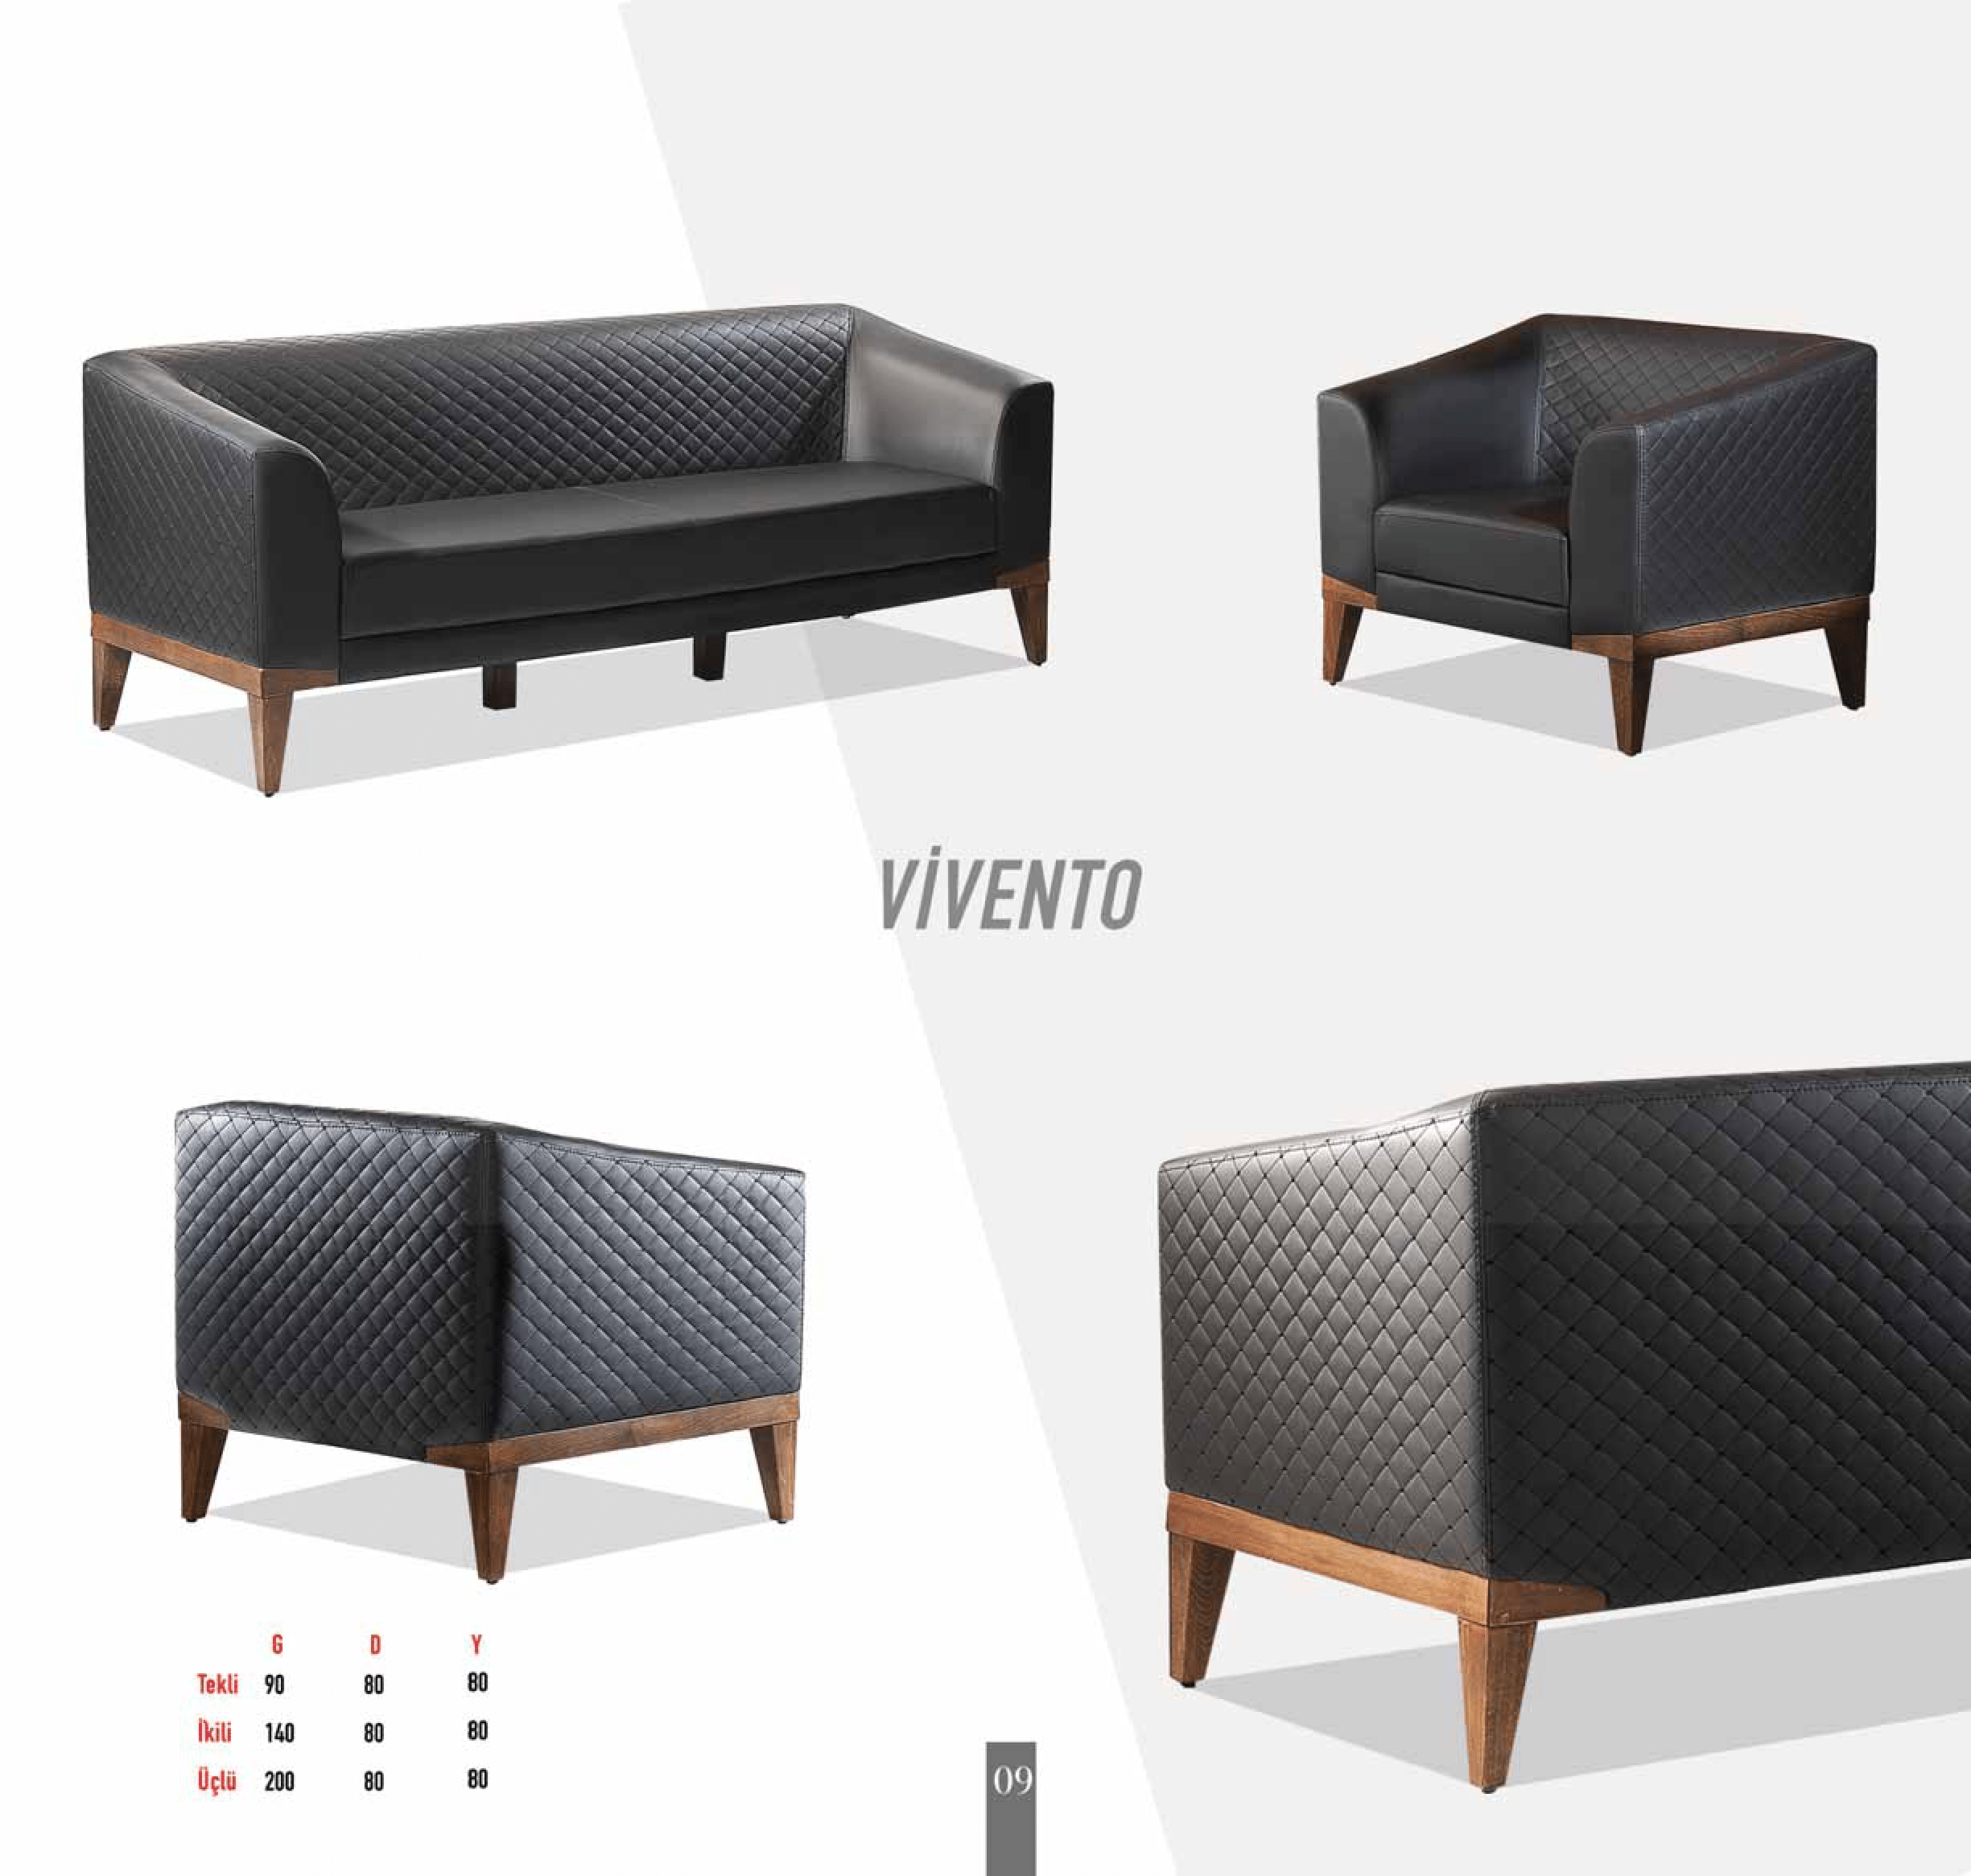 Vivento Office Furniture